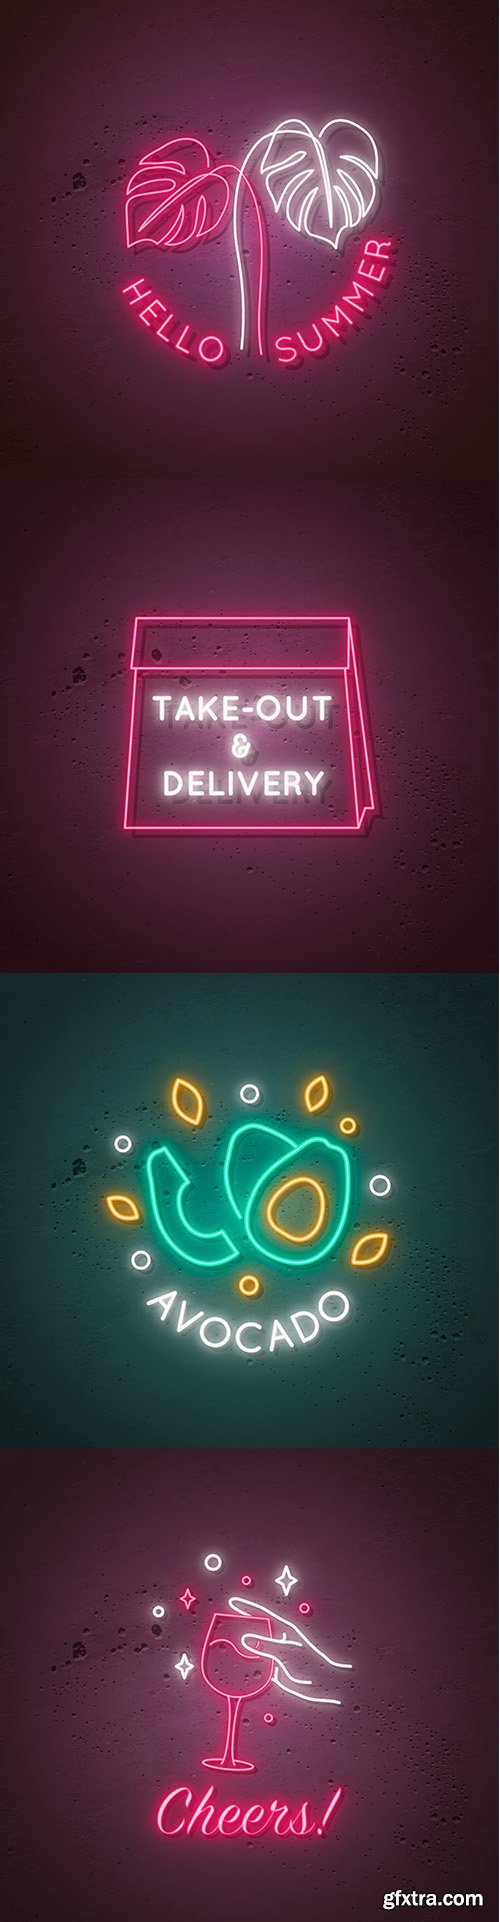 Neon Signboard Illustrations